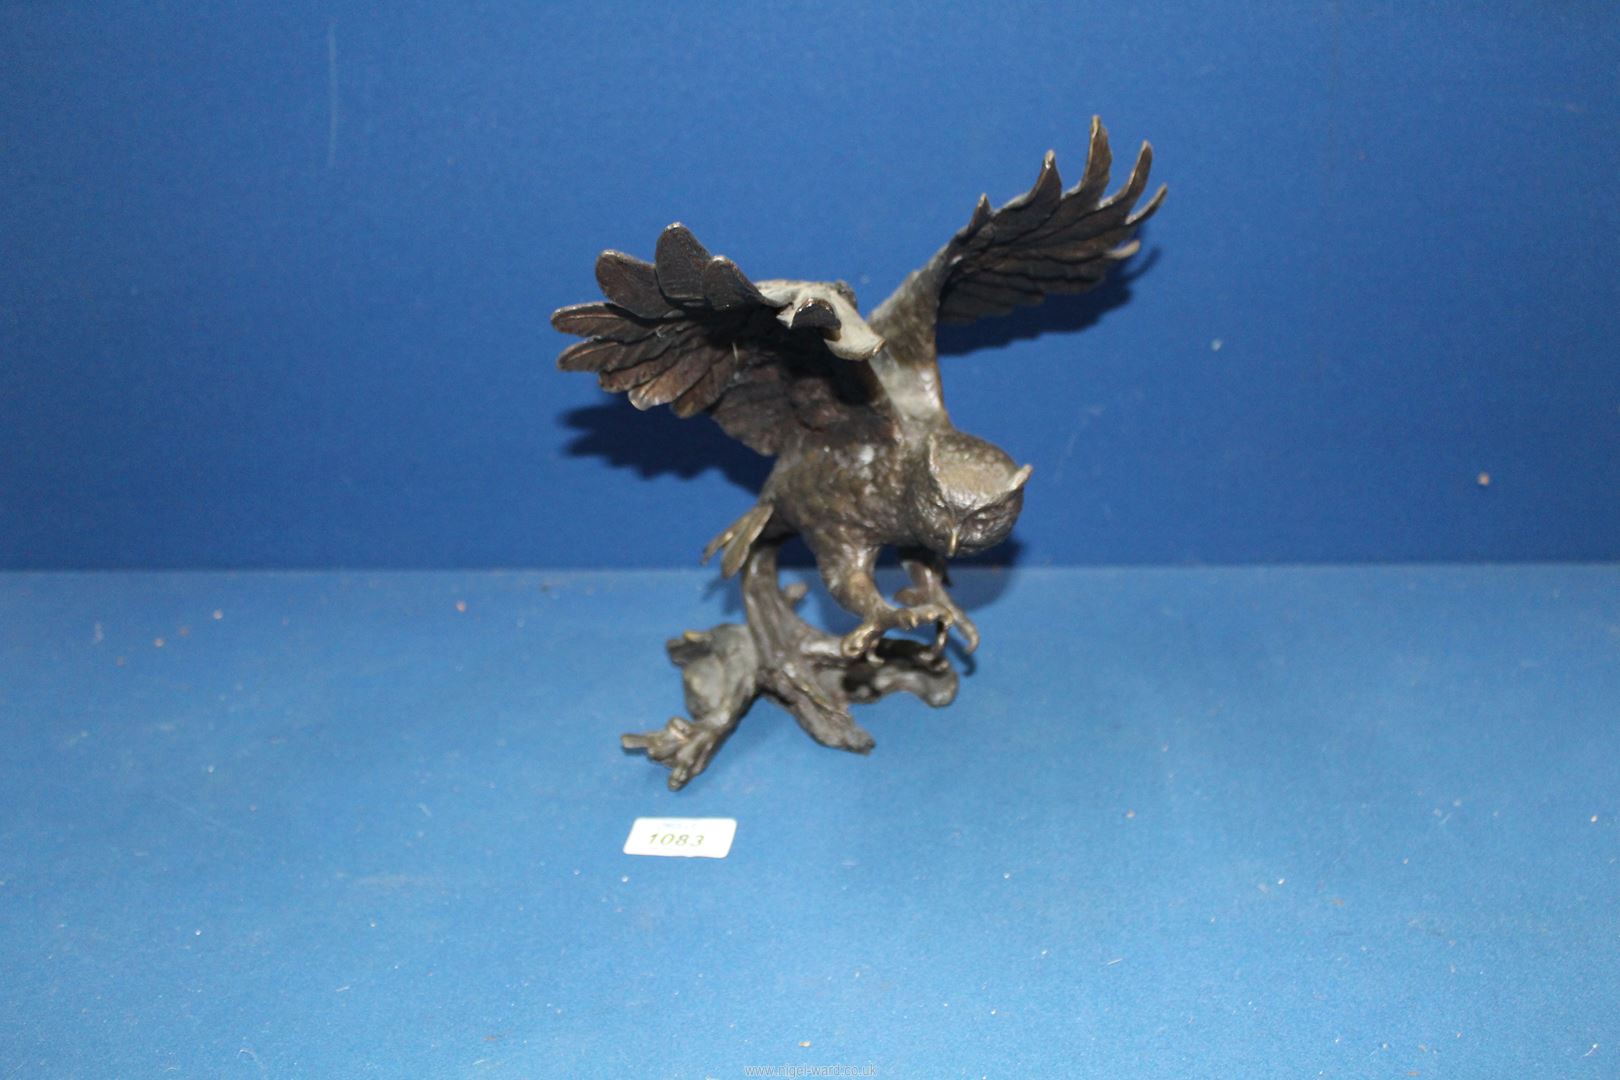 A heavy cast metal model of an Owl, 10" tall.